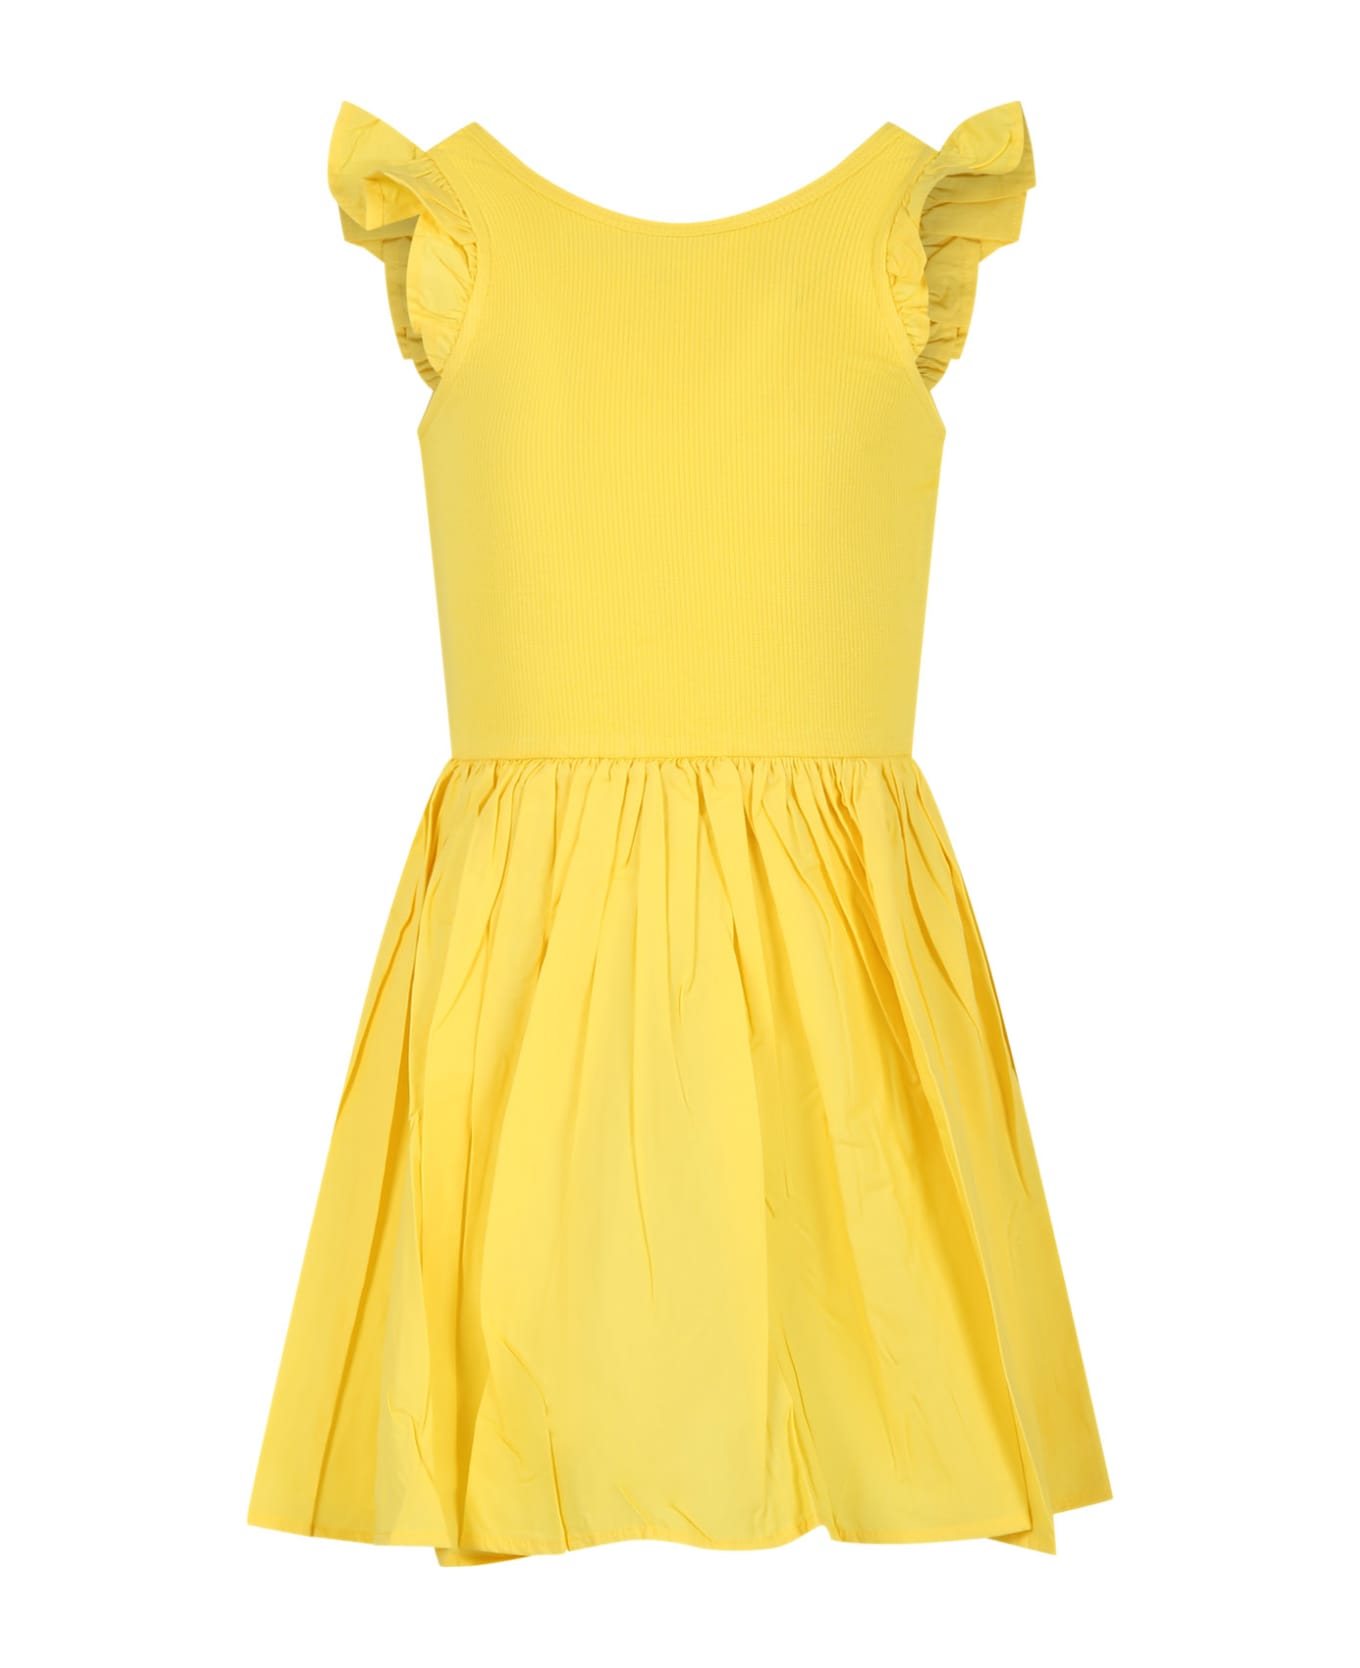 Molo Yellow Dress For Girl - Yellow